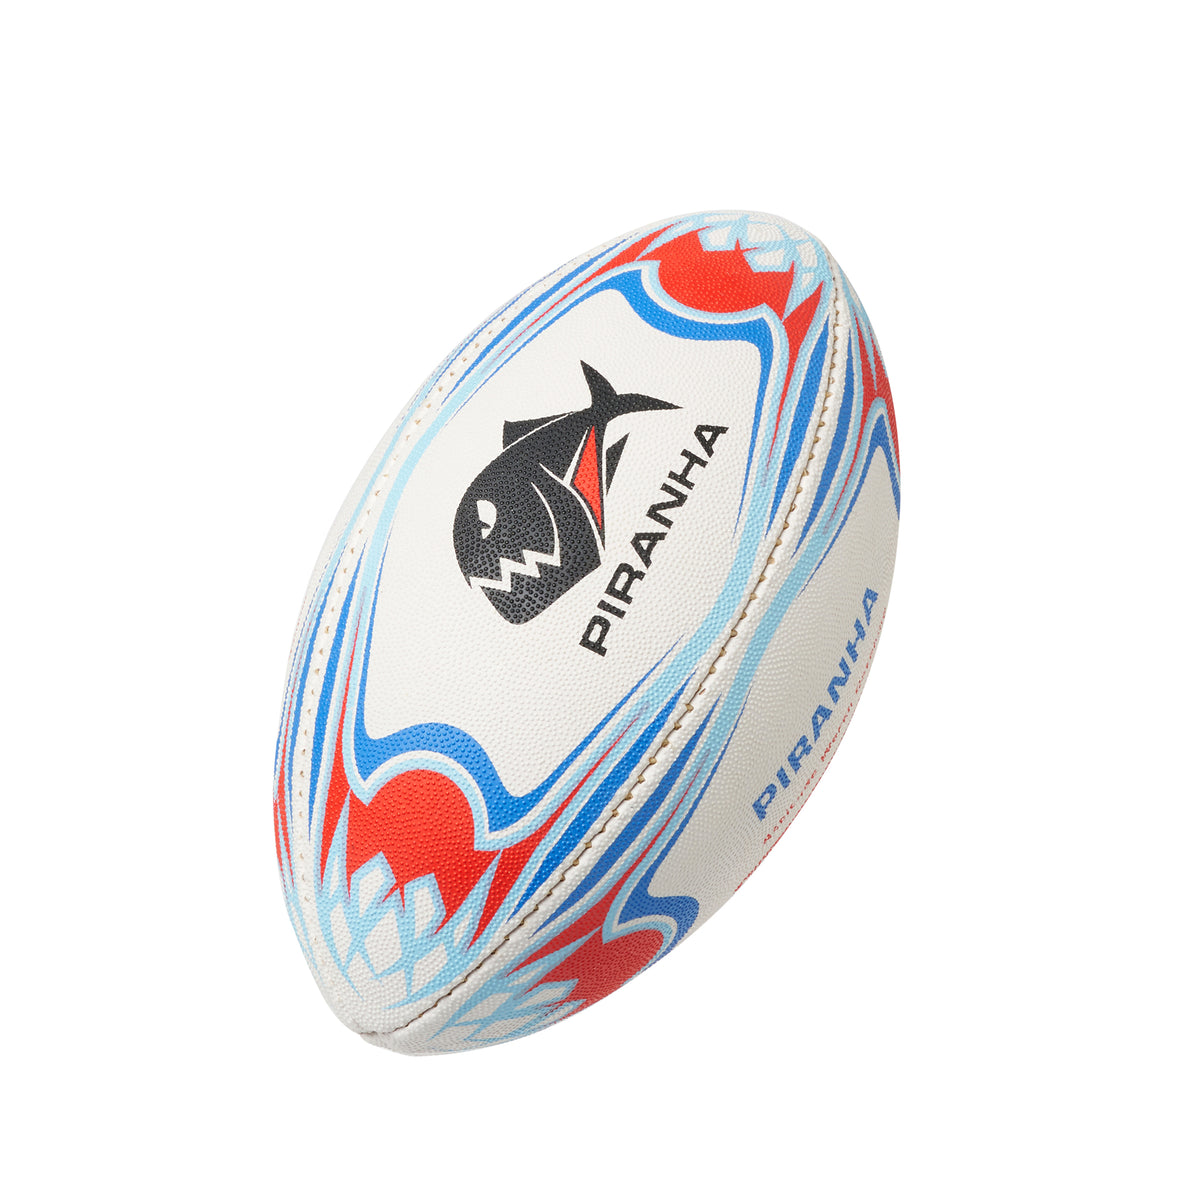 Piranha Rugby Ball Midi